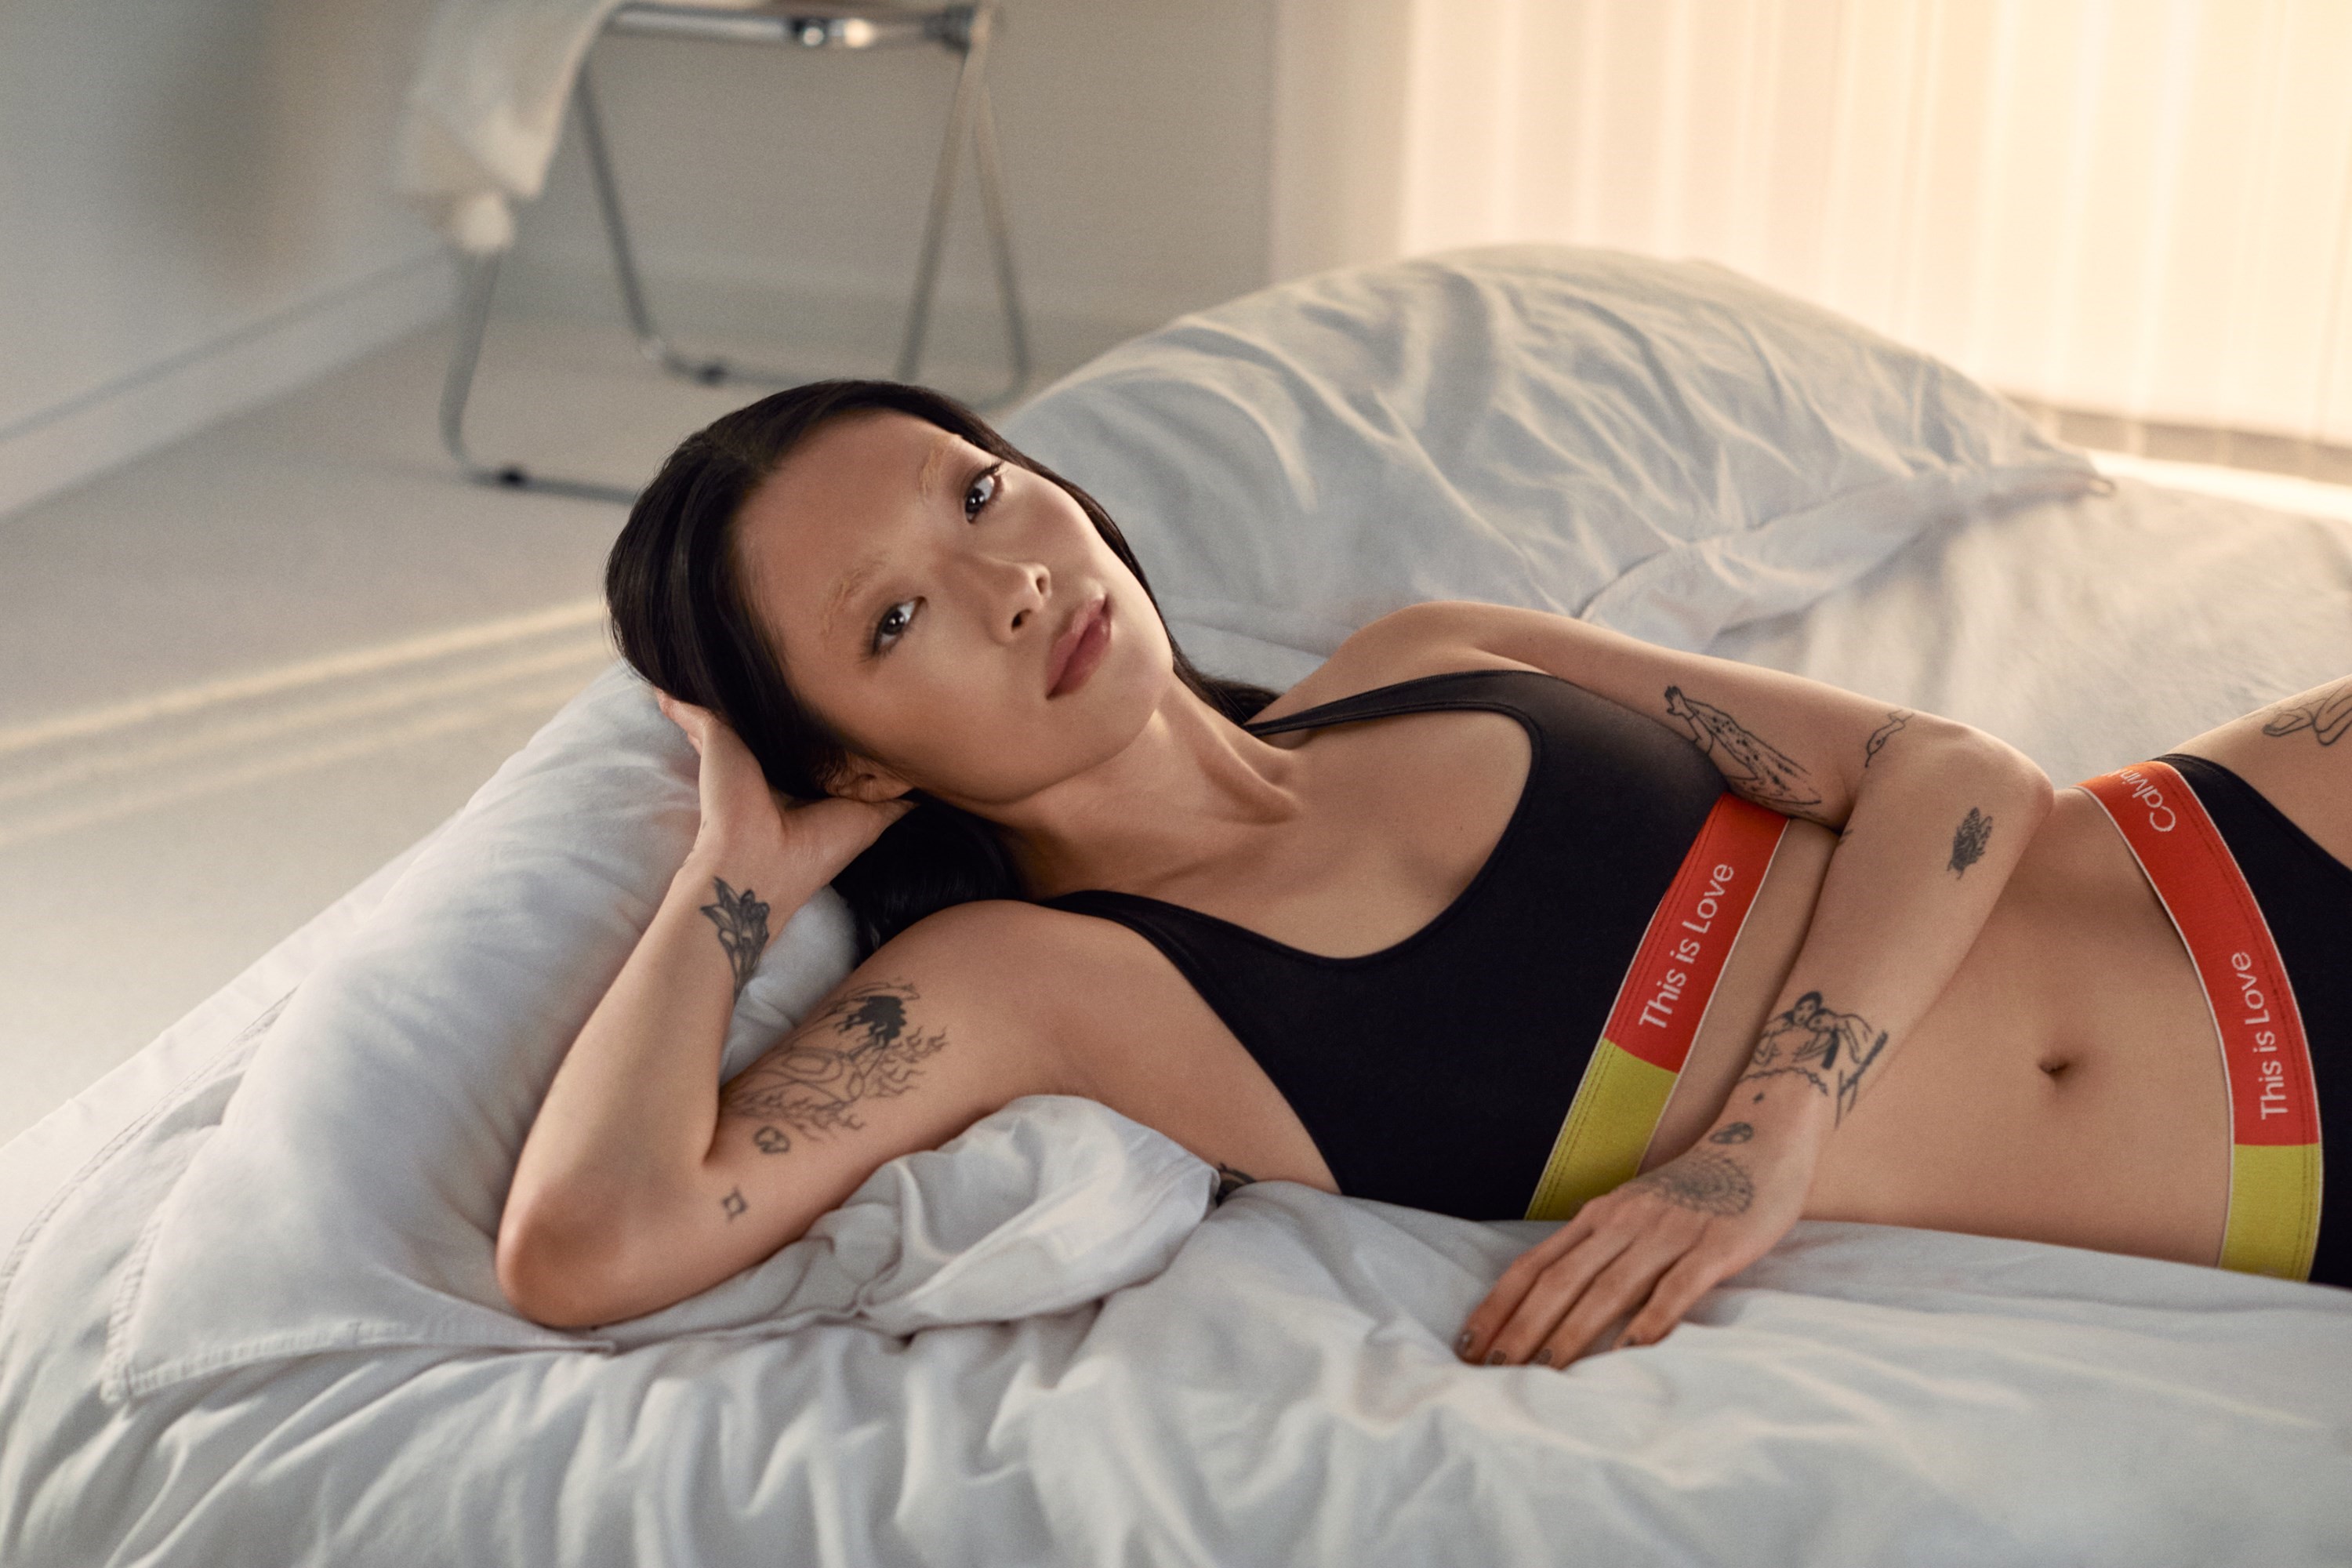 Calvin Klein celebrates Pride through sensual self-expression in